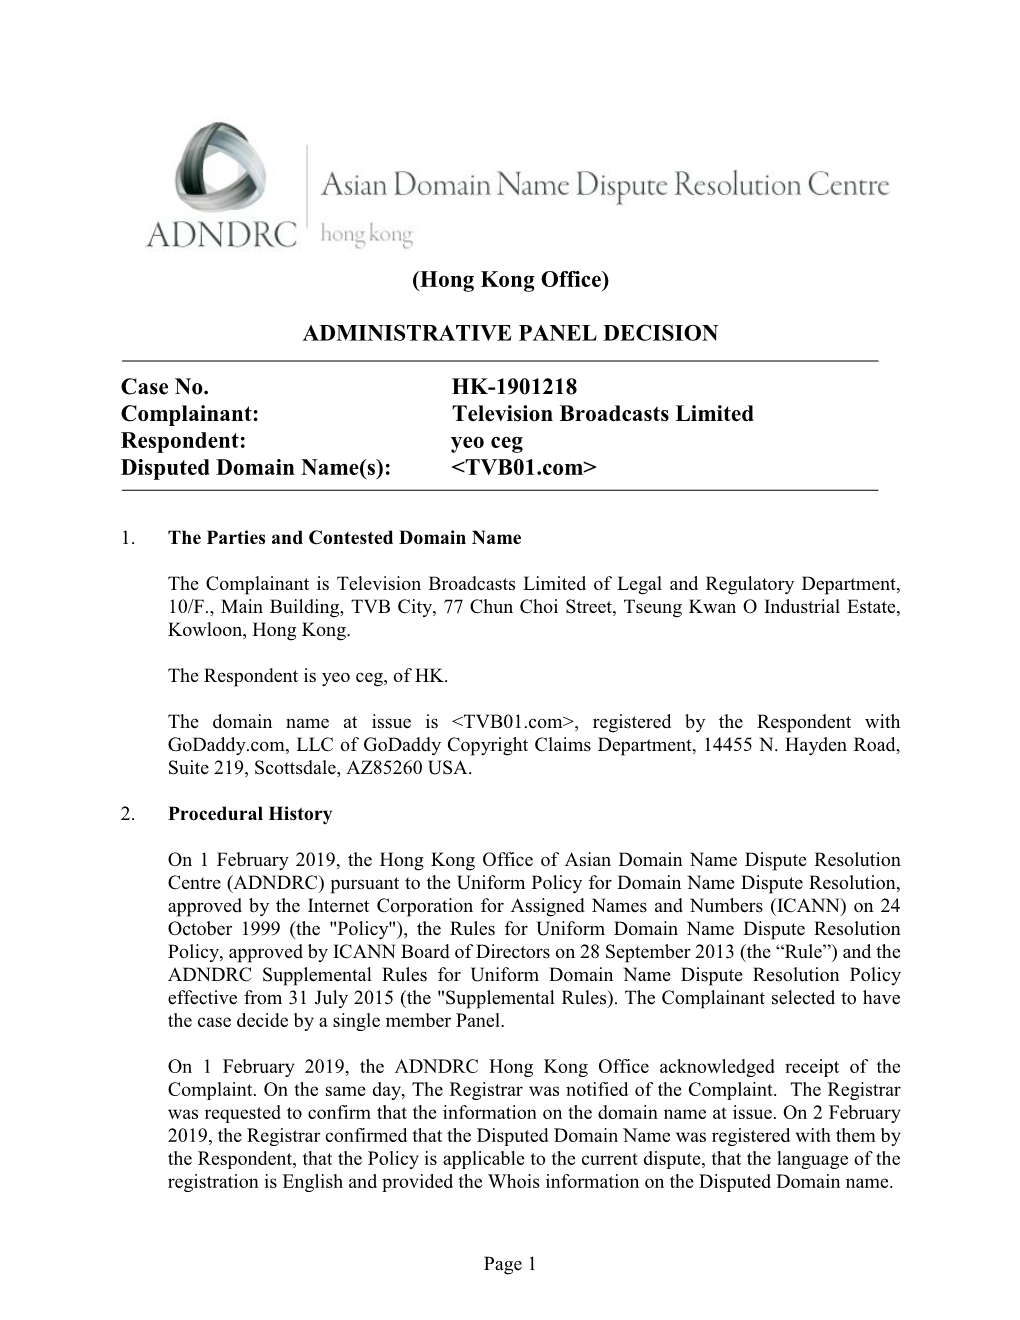 (Hong Kong Office) ADMINISTRATIVE PANEL DECISION Case No. HK